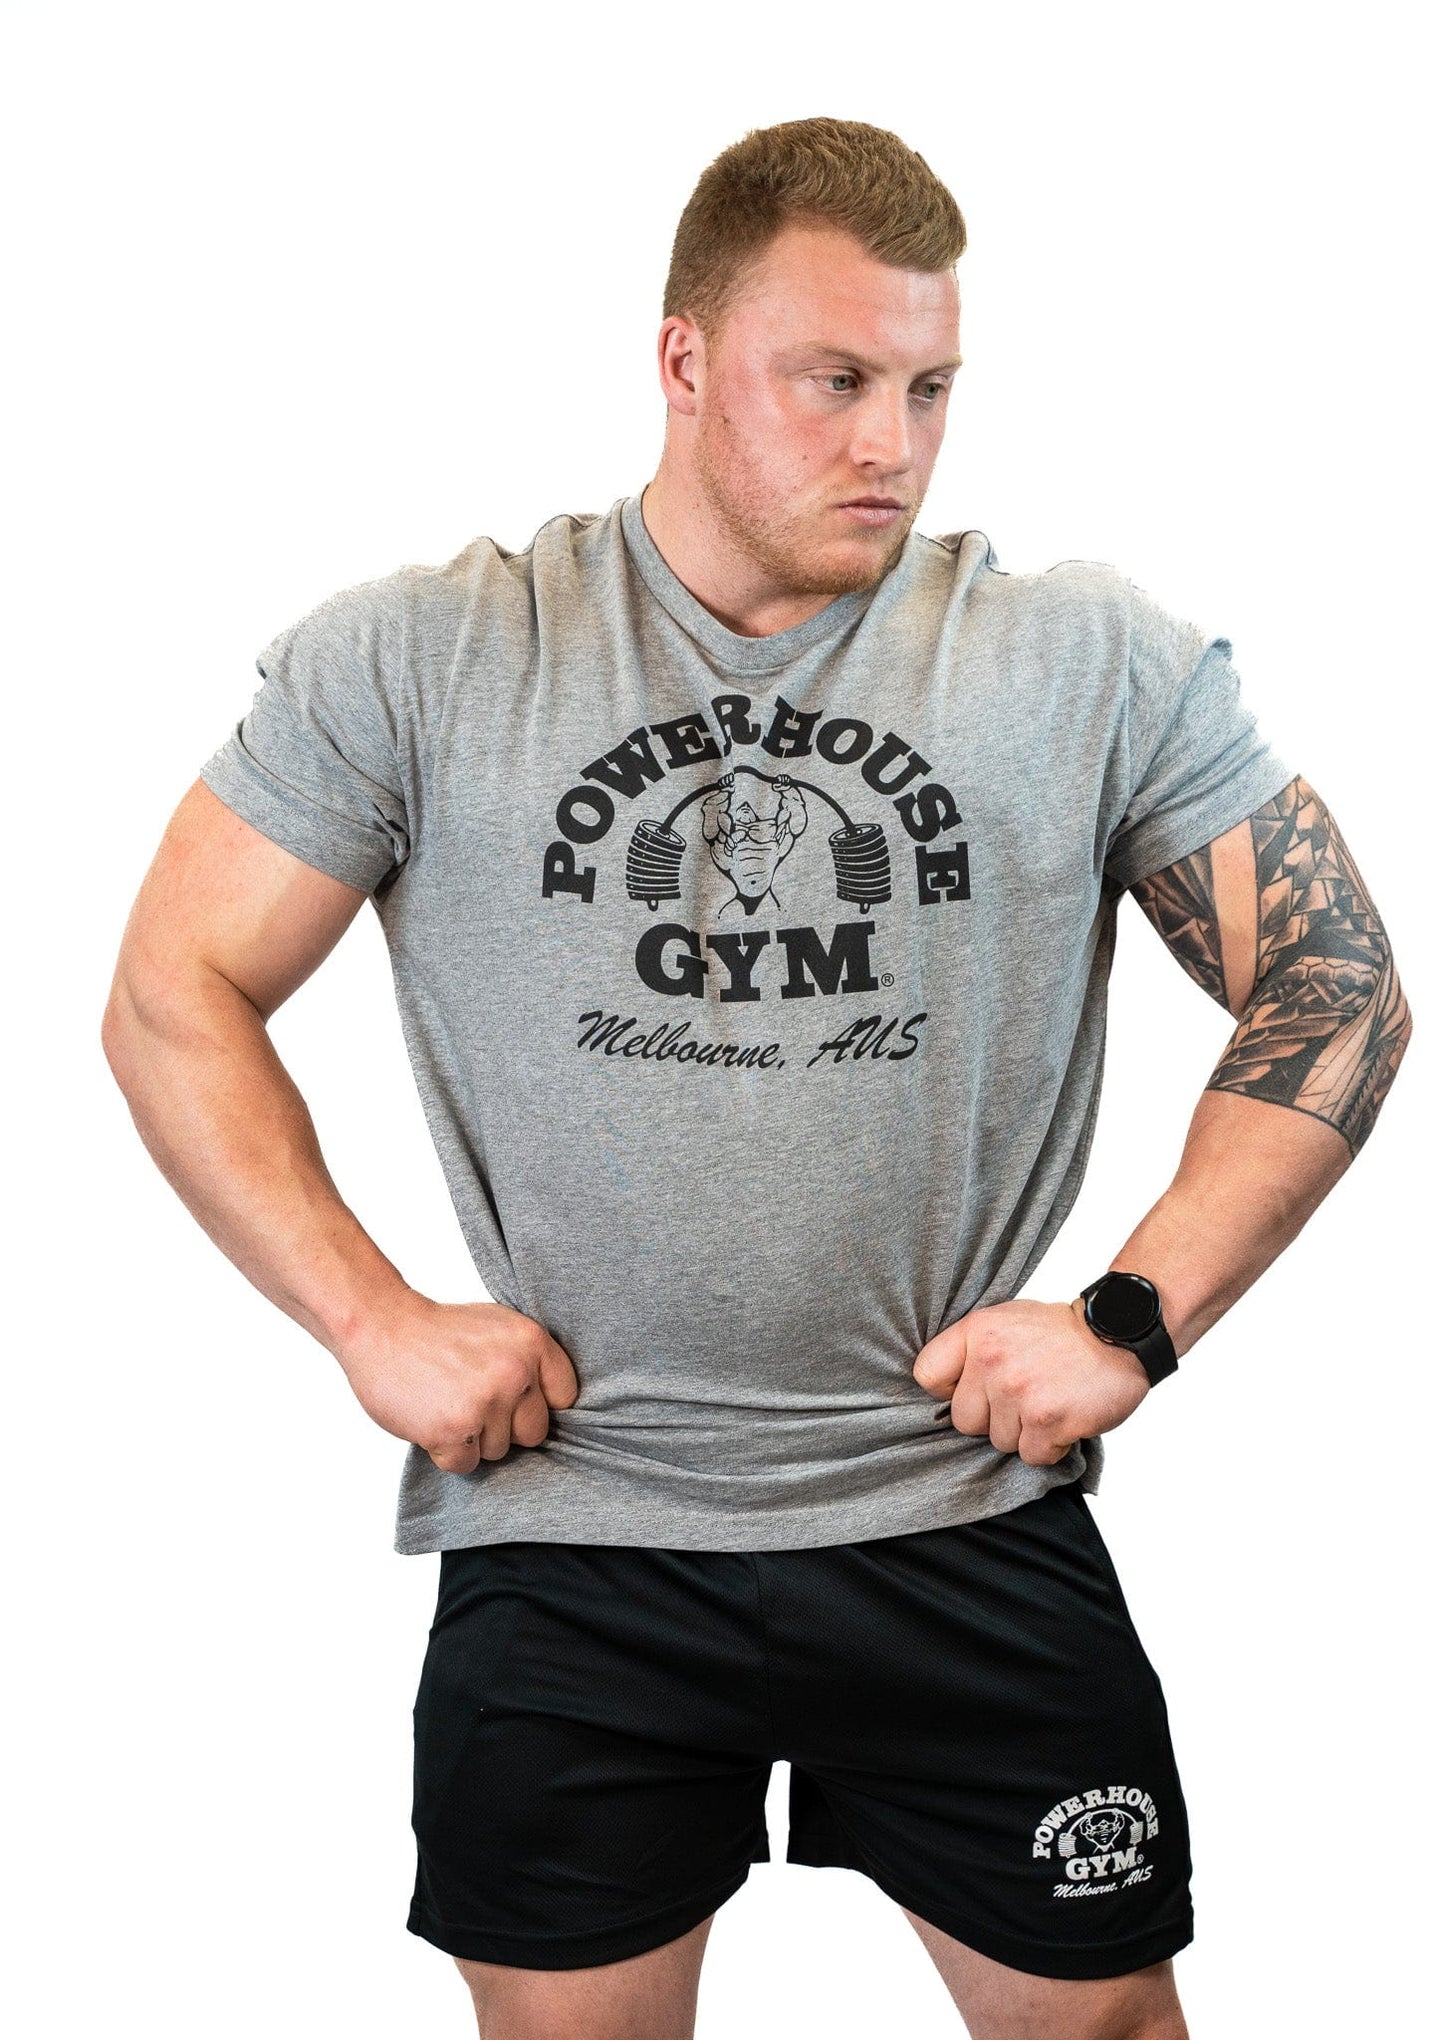 Powerhouse Gym Pro Shop Small Block T-Shirt Grey/Black